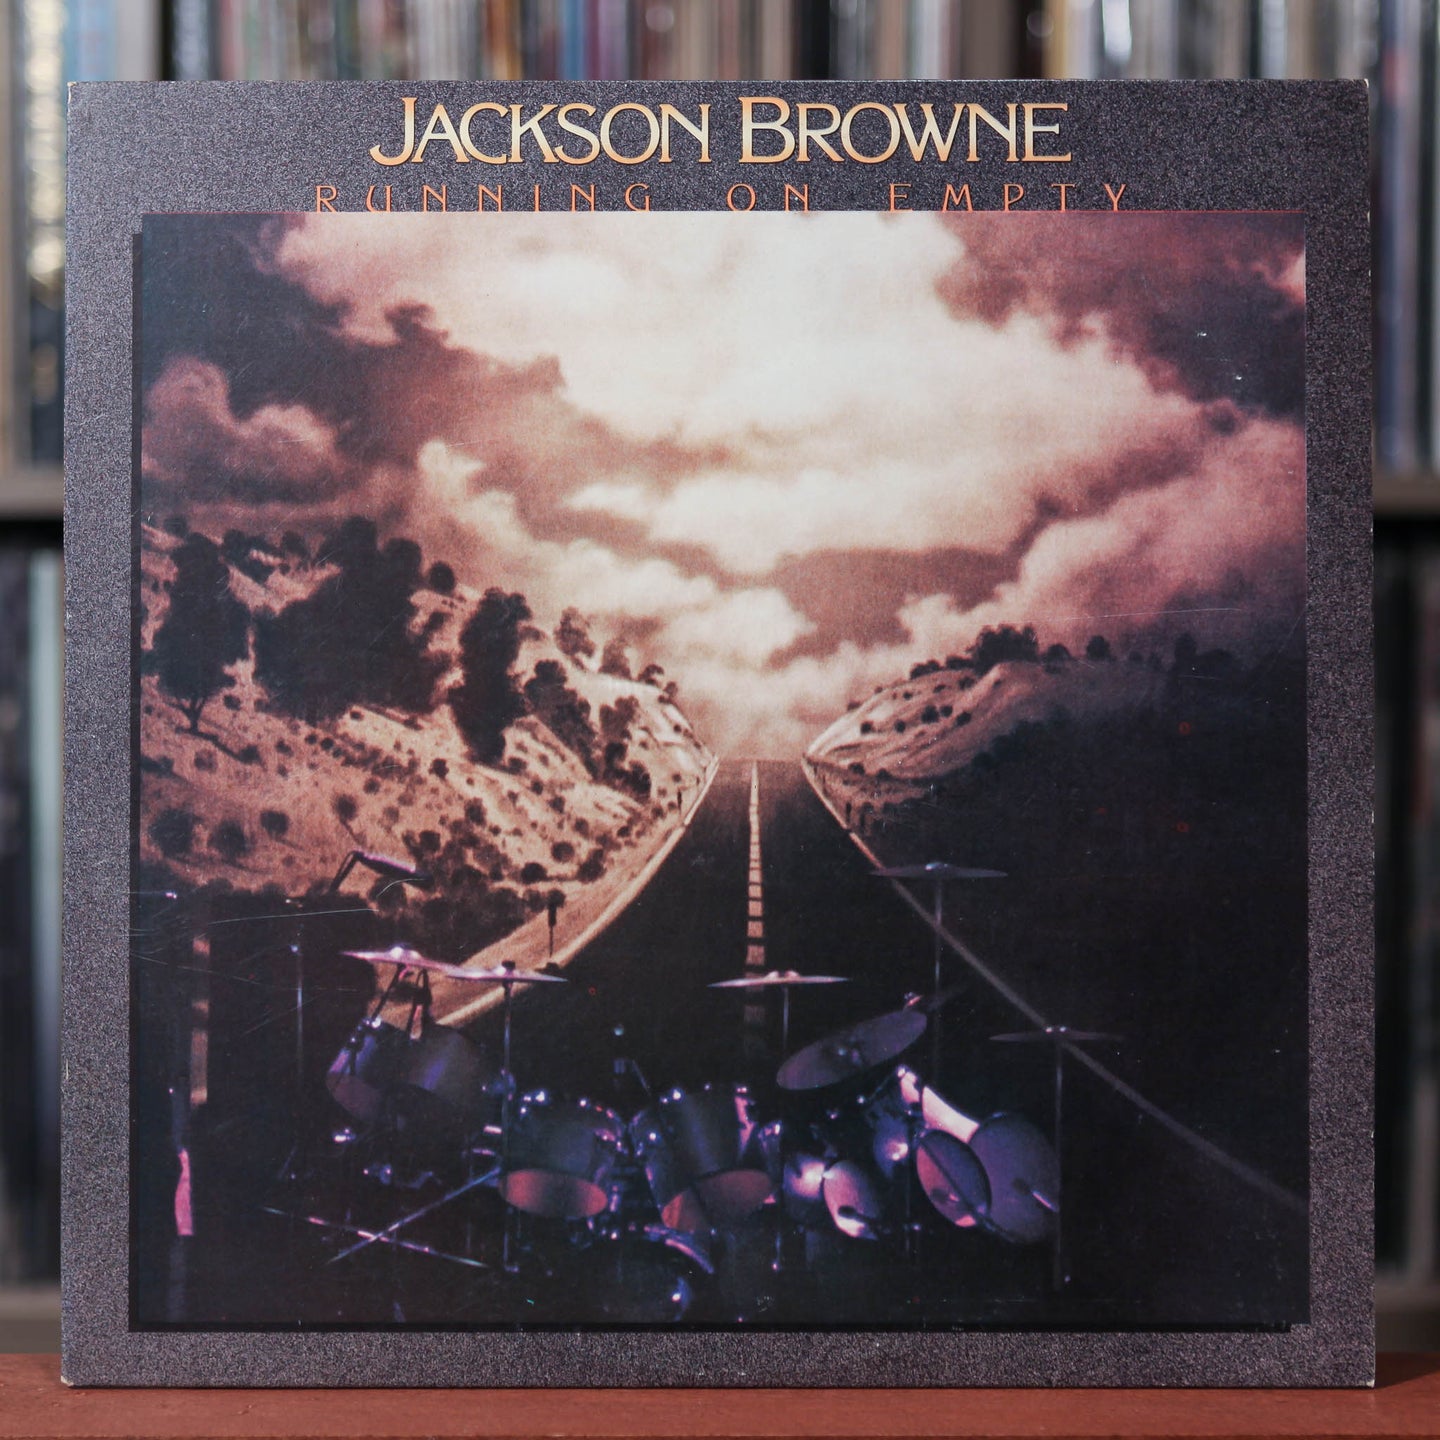 Jackson Browne - Running On Empty - 1977 Asylum, EX/EX